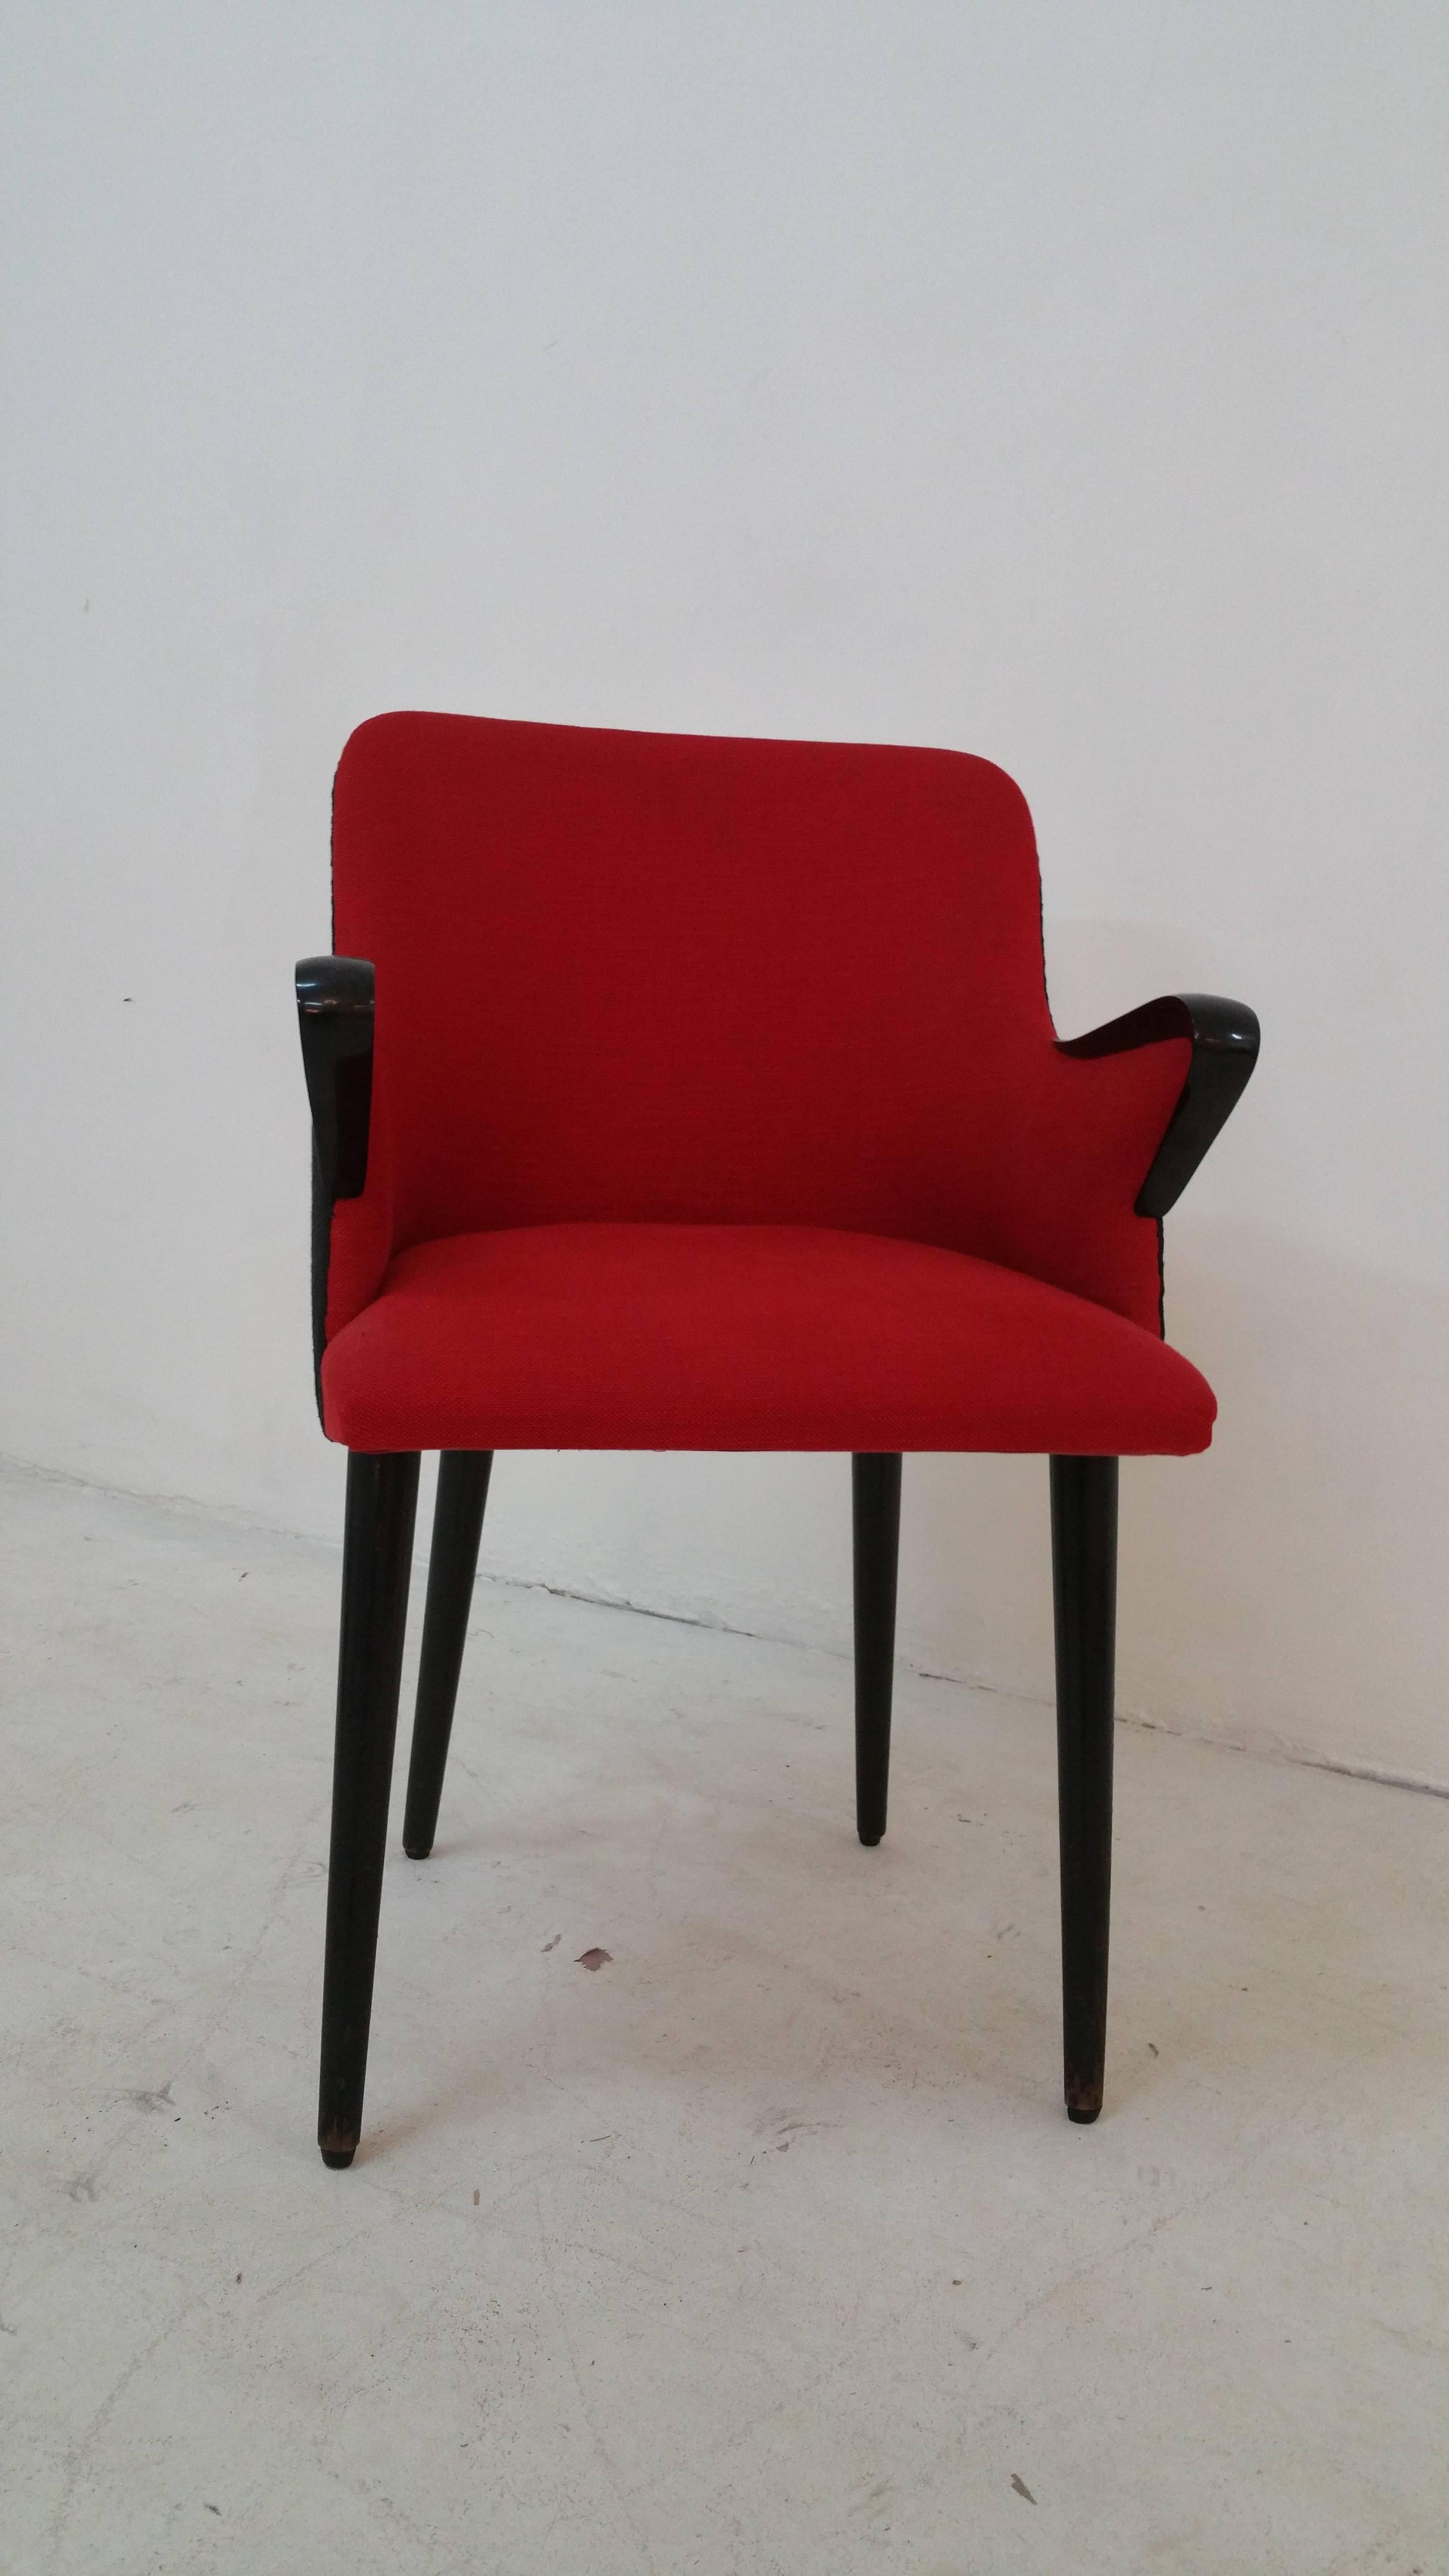 Four red chairs designed by Osvaldo Borsani per Tecno,
circa 1950.